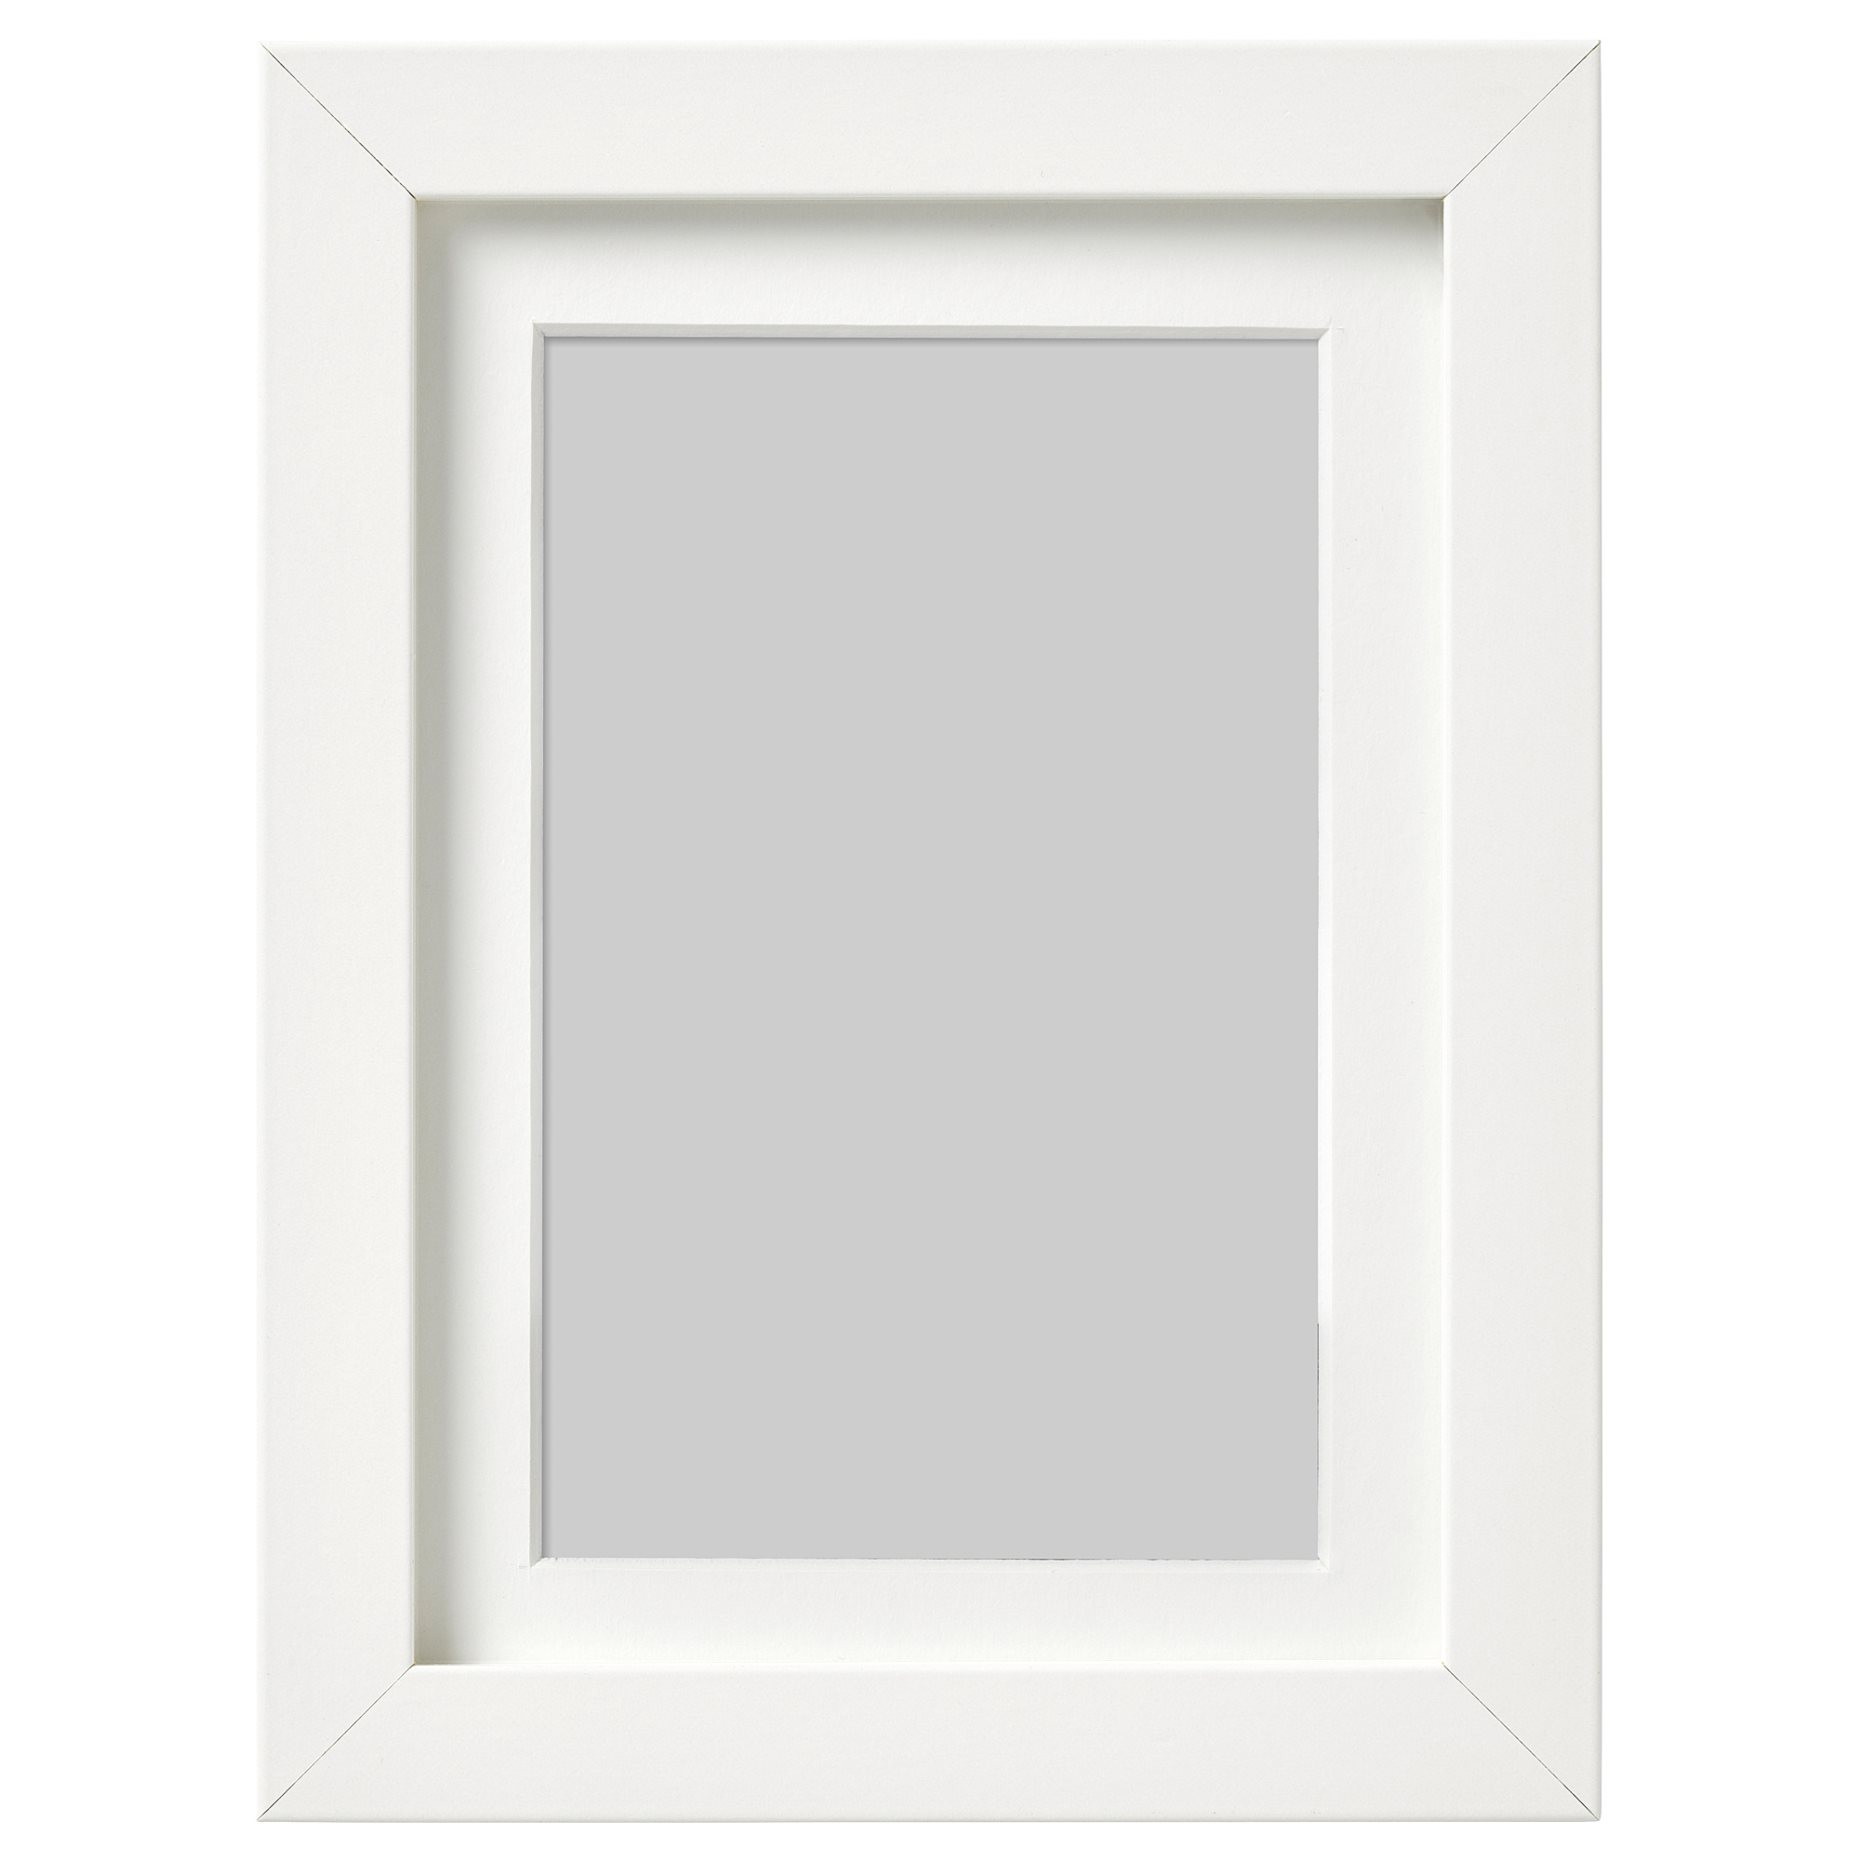 RIBBA, frame, 13x18 cm, 703.784.14